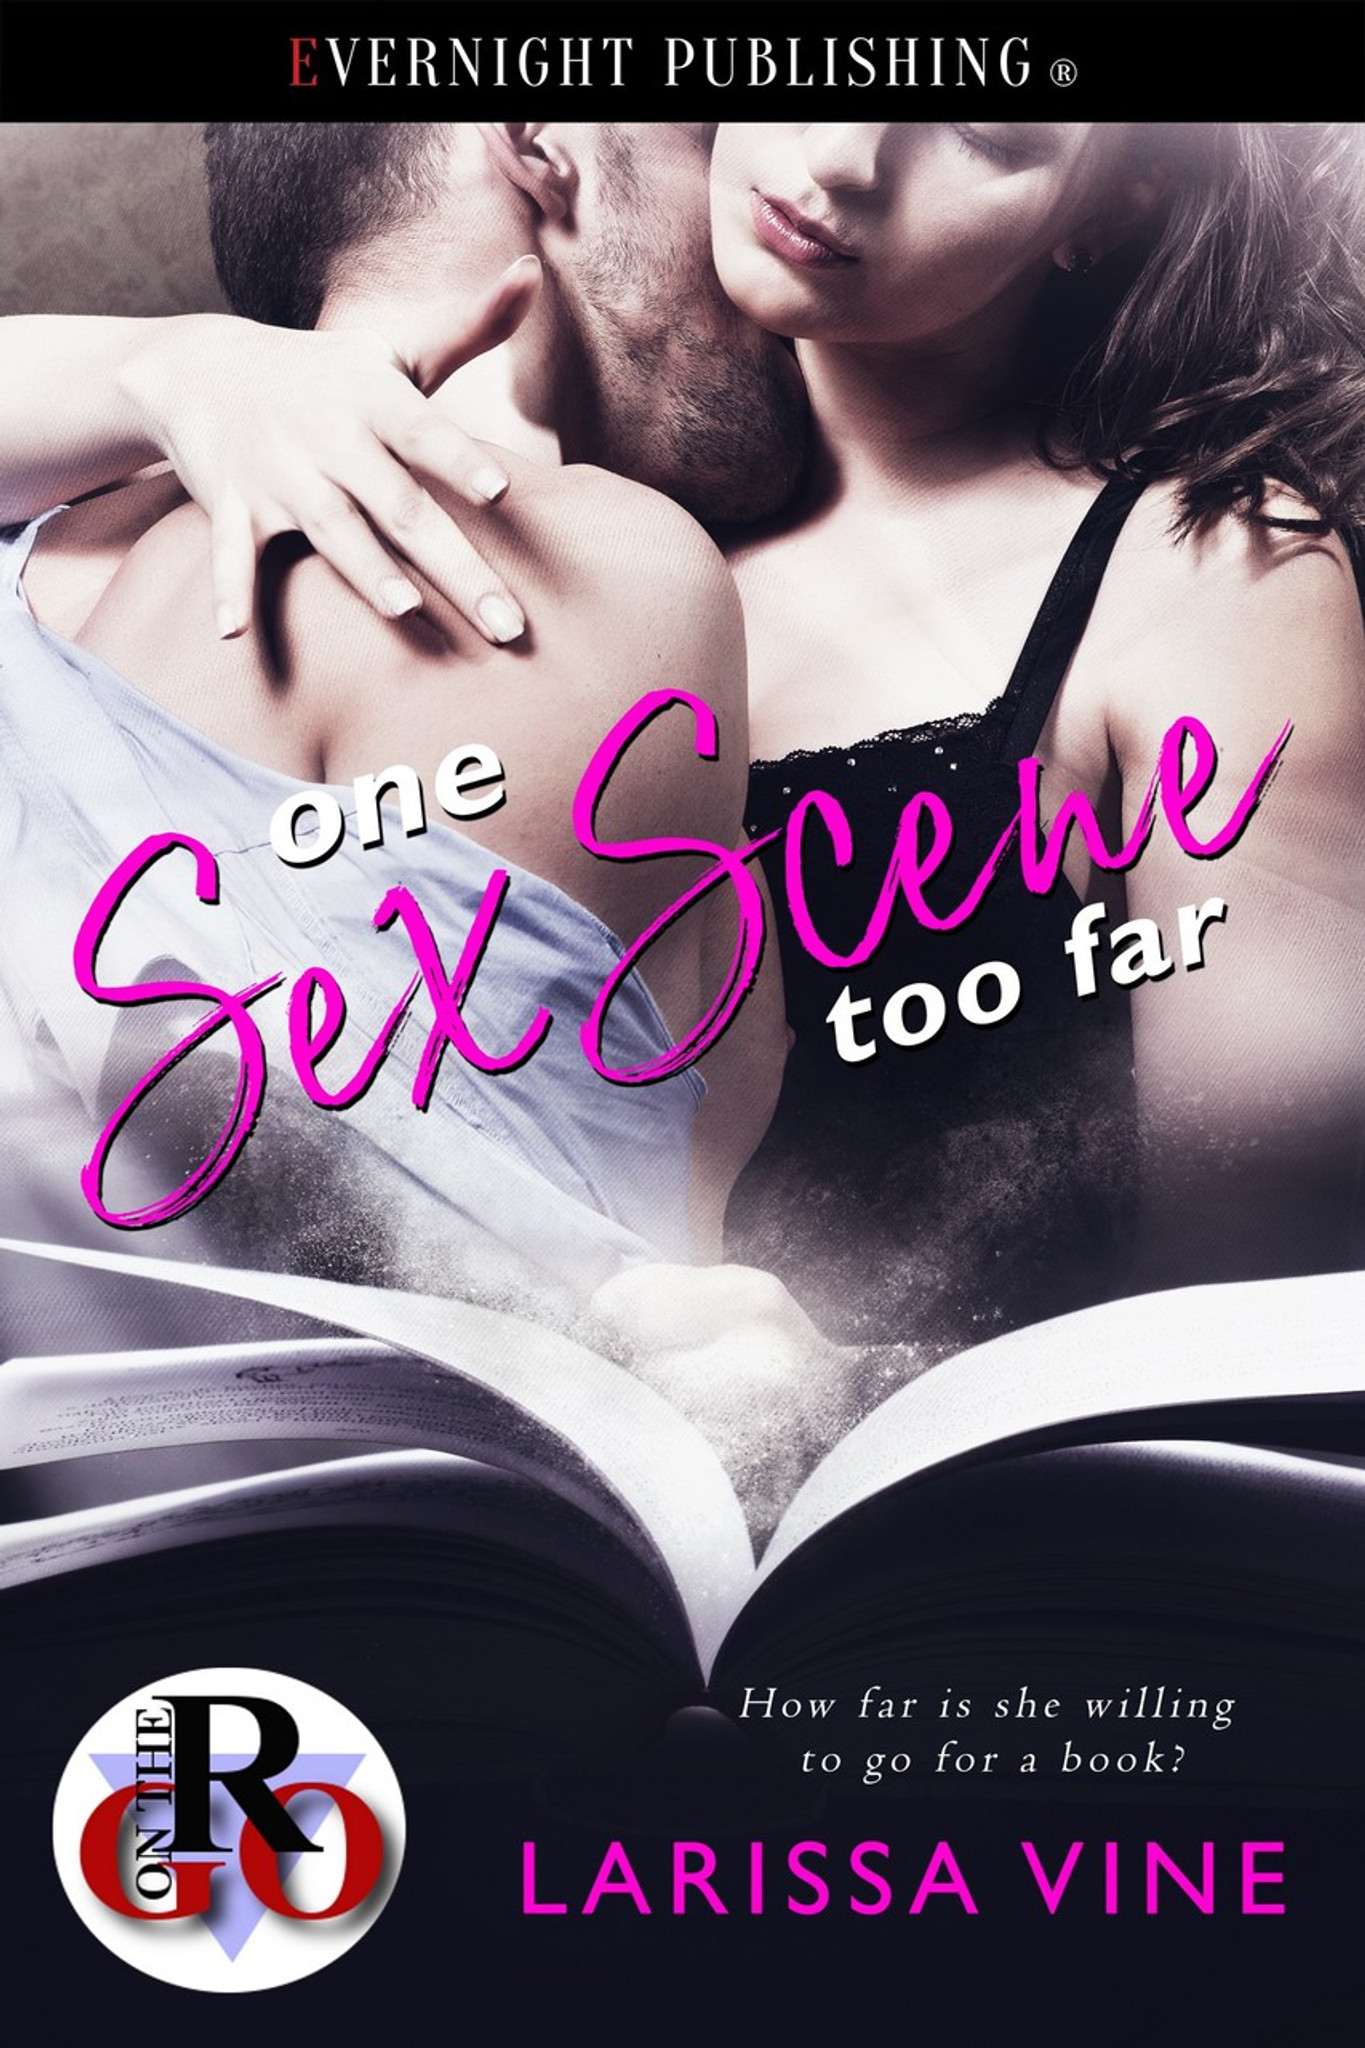 One Sex Scene Too Far by Larissa Vine image